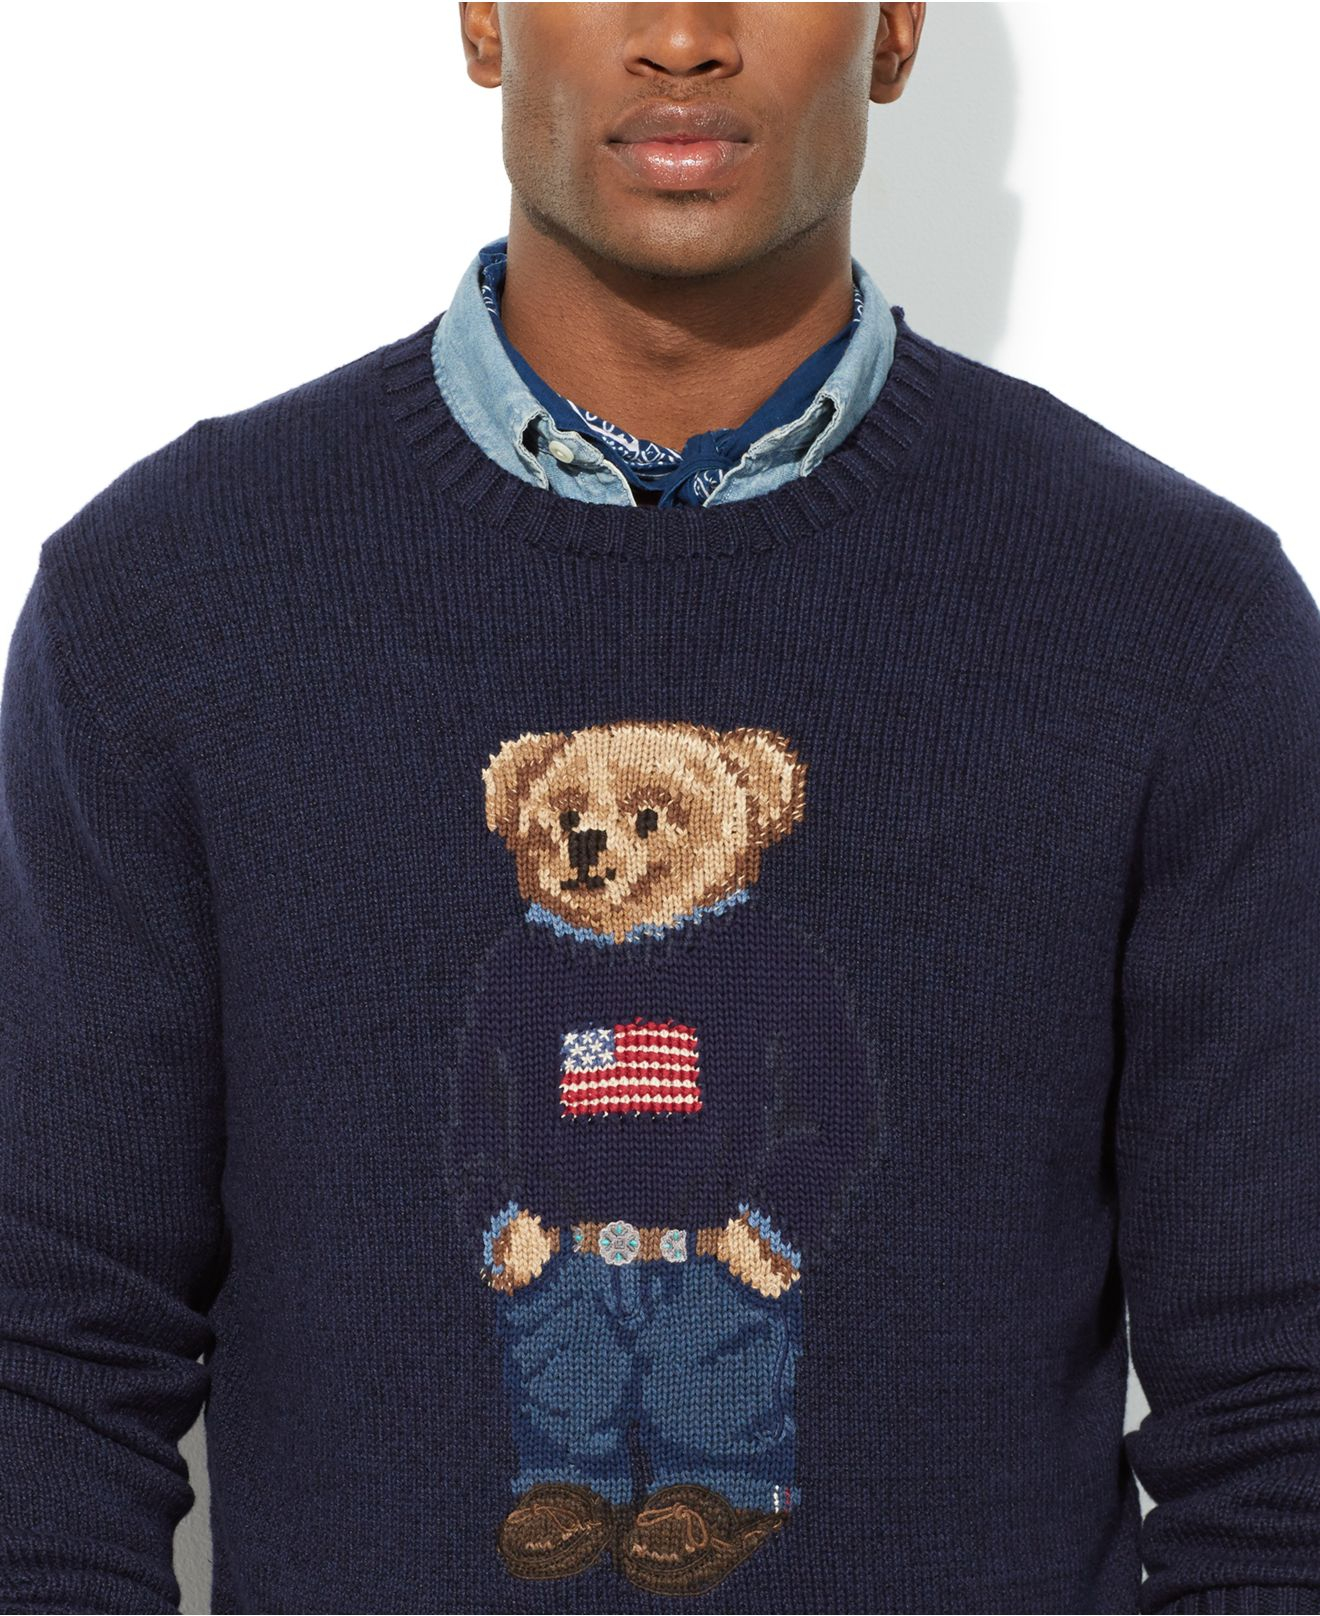 Polo Ralph Lauren Polo Bear Sweater in Navy (Blue) for Men - Lyst